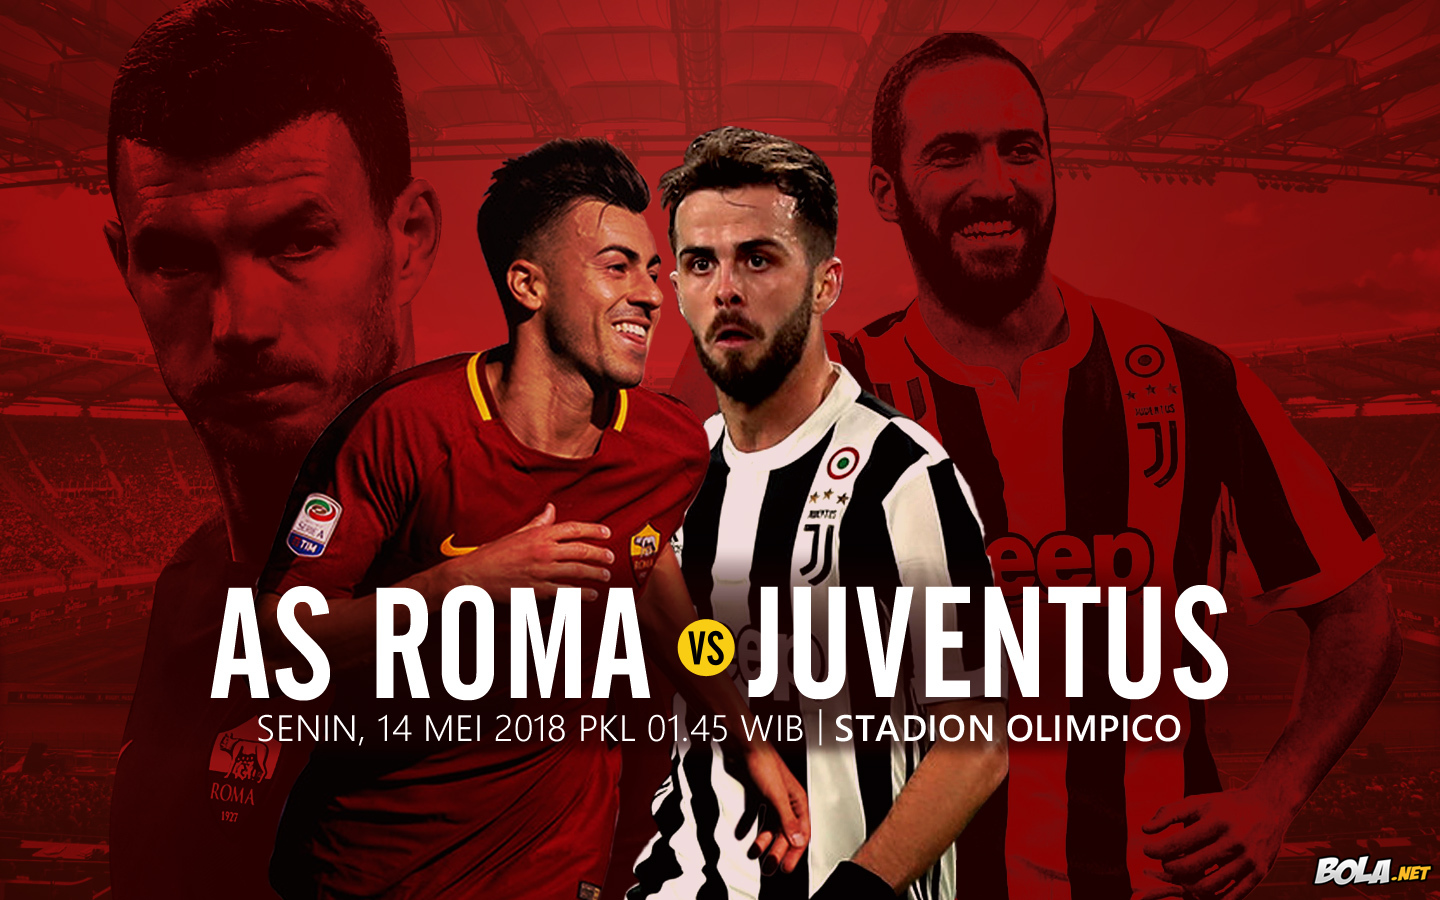 Deskripsi : Wallpaper As Roma Vs Juventus, size: 1440x900